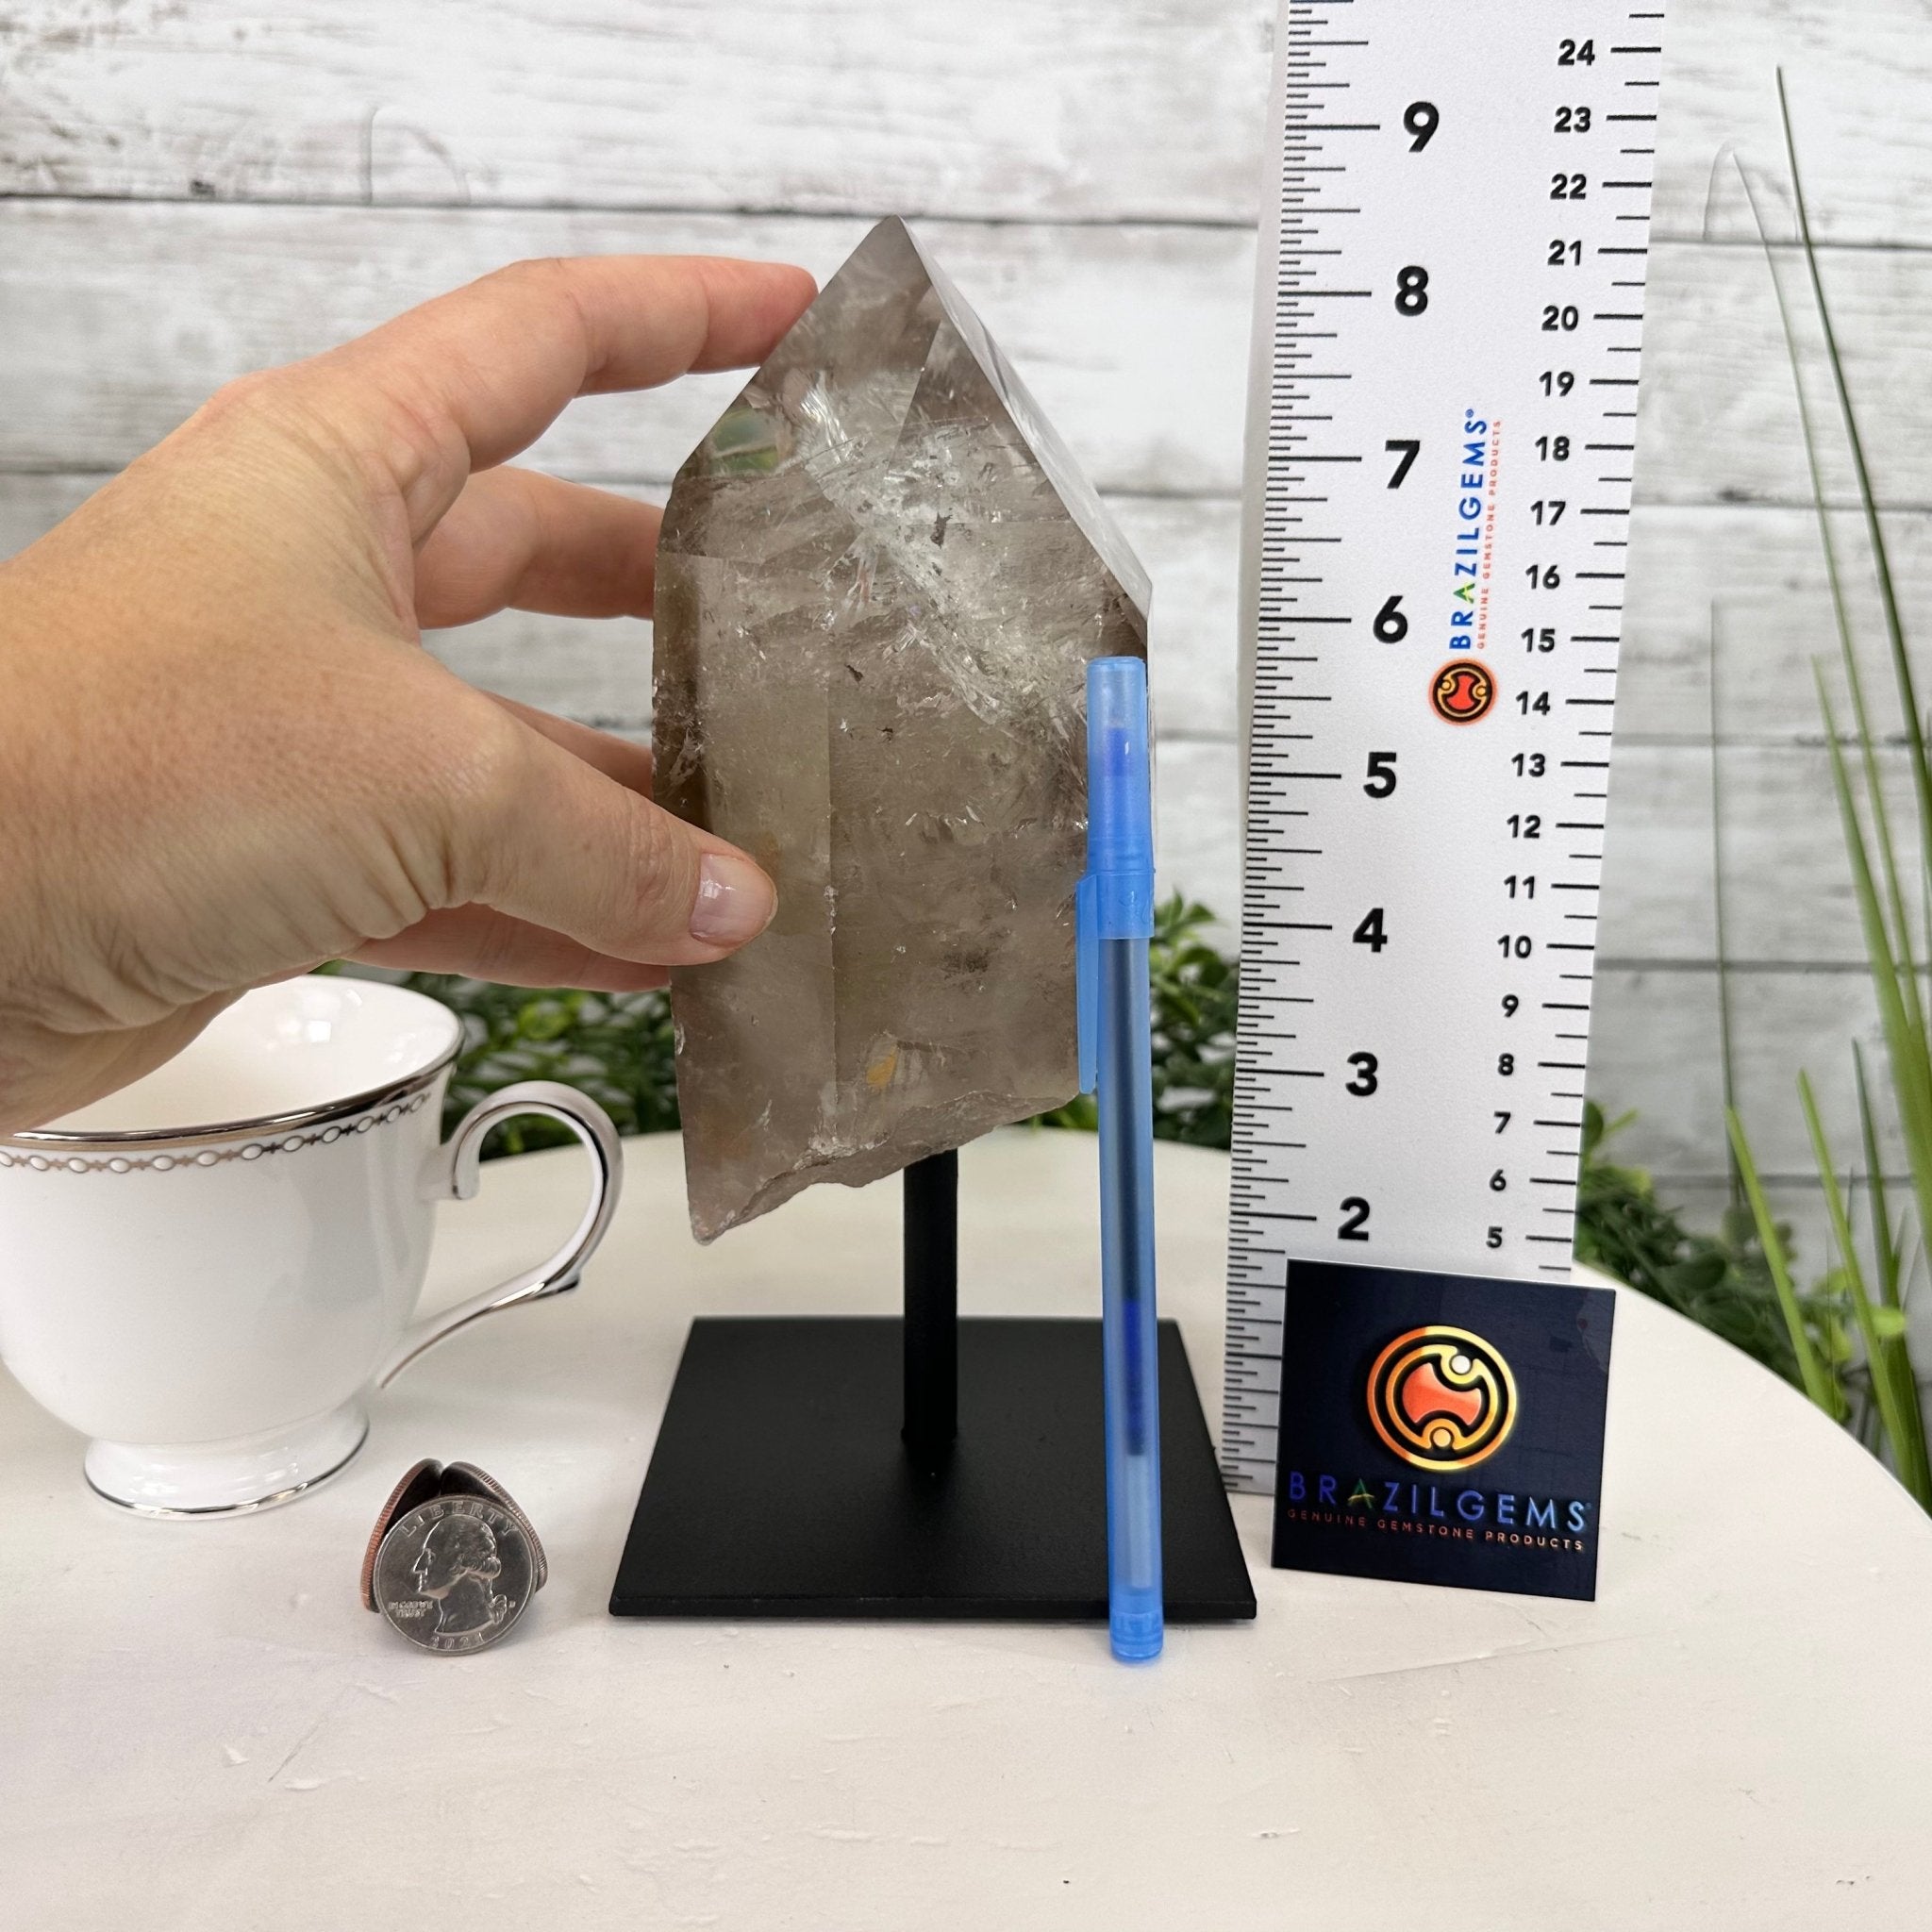 Smoky Quartz Crystal Point on a Metal Stand, 8.3" Tall Model #3122SQ-006 by Brazil Gems - Brazil GemsBrazil GemsSmoky Quartz Crystal Point on a Metal Stand, 8.3" Tall Model #3122SQ-006 by Brazil GemsCrystal Points3122SQ-006